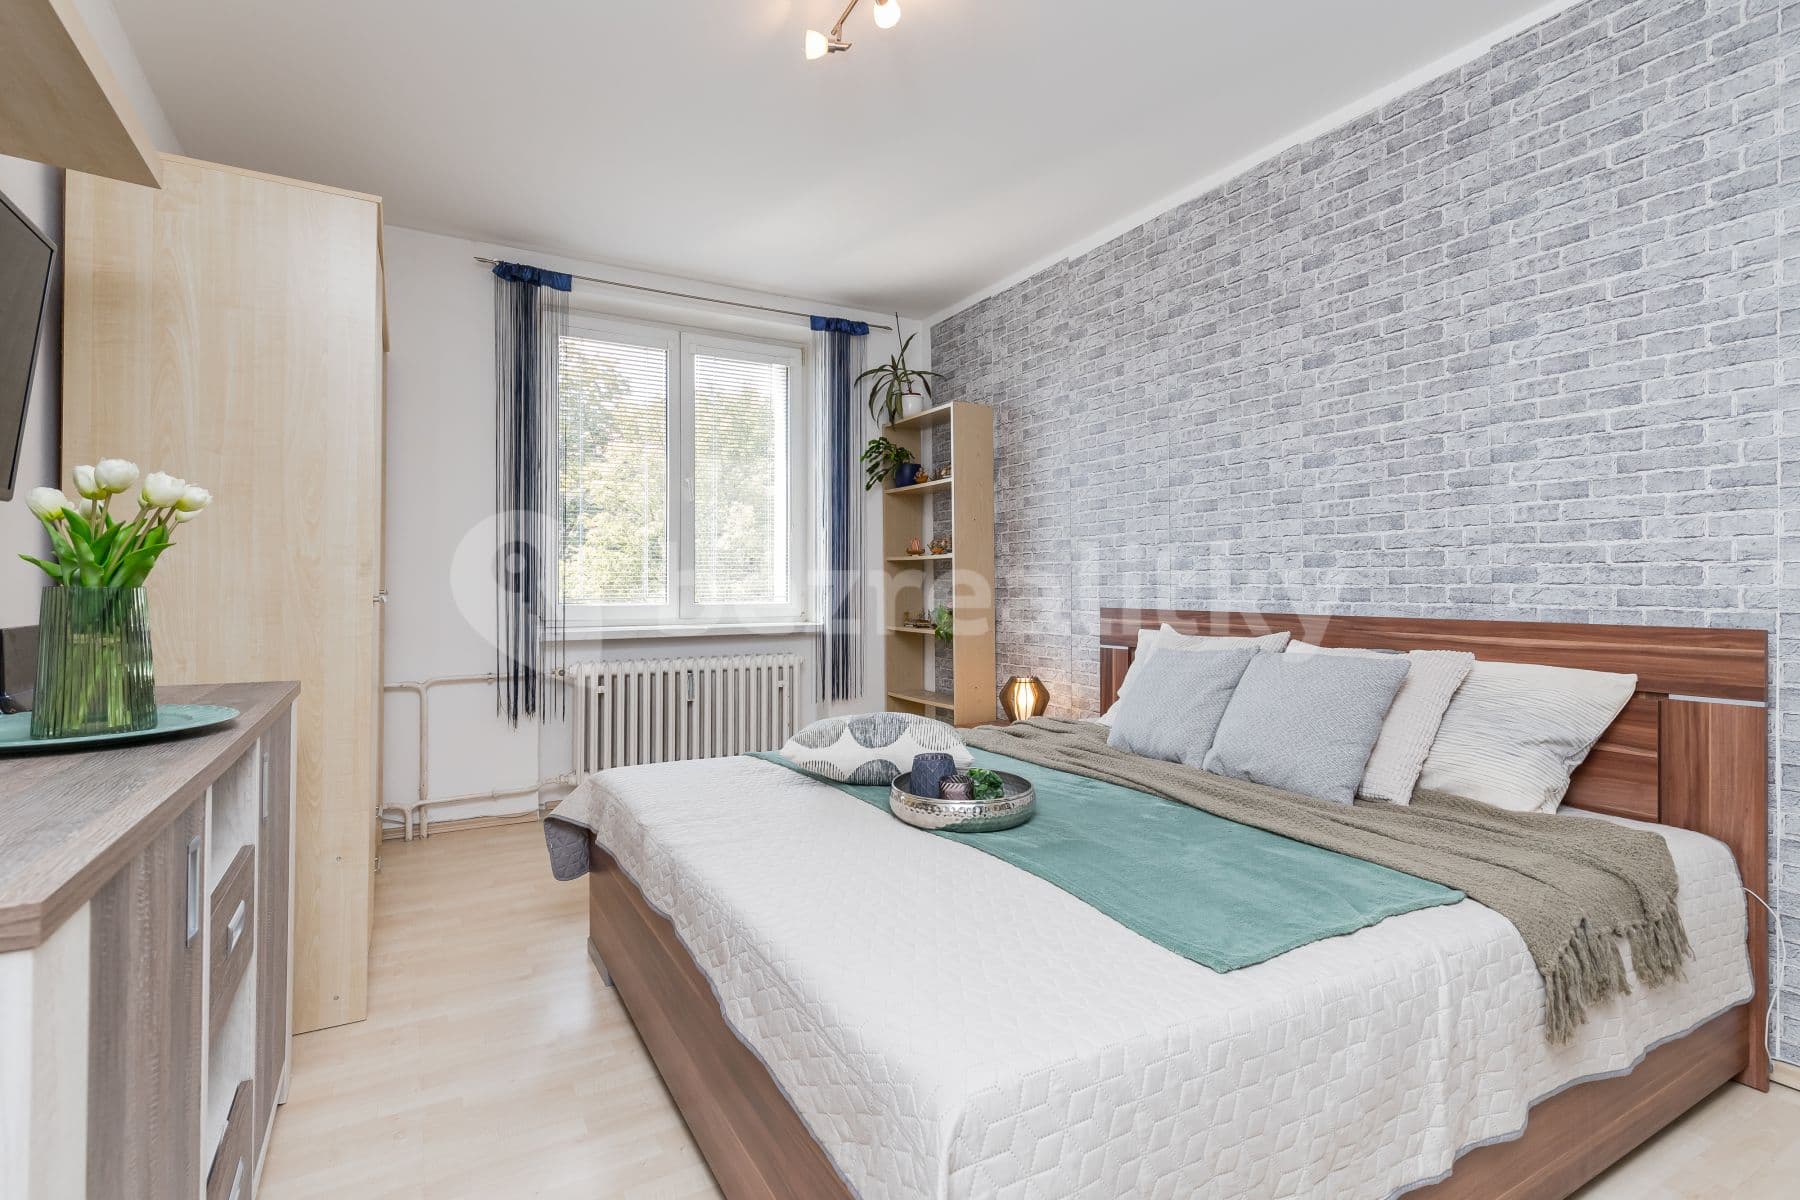 1 bedroom with open-plan kitchen flat to rent, 54 m², Heyrovského, Sokolov, Karlovarský Region